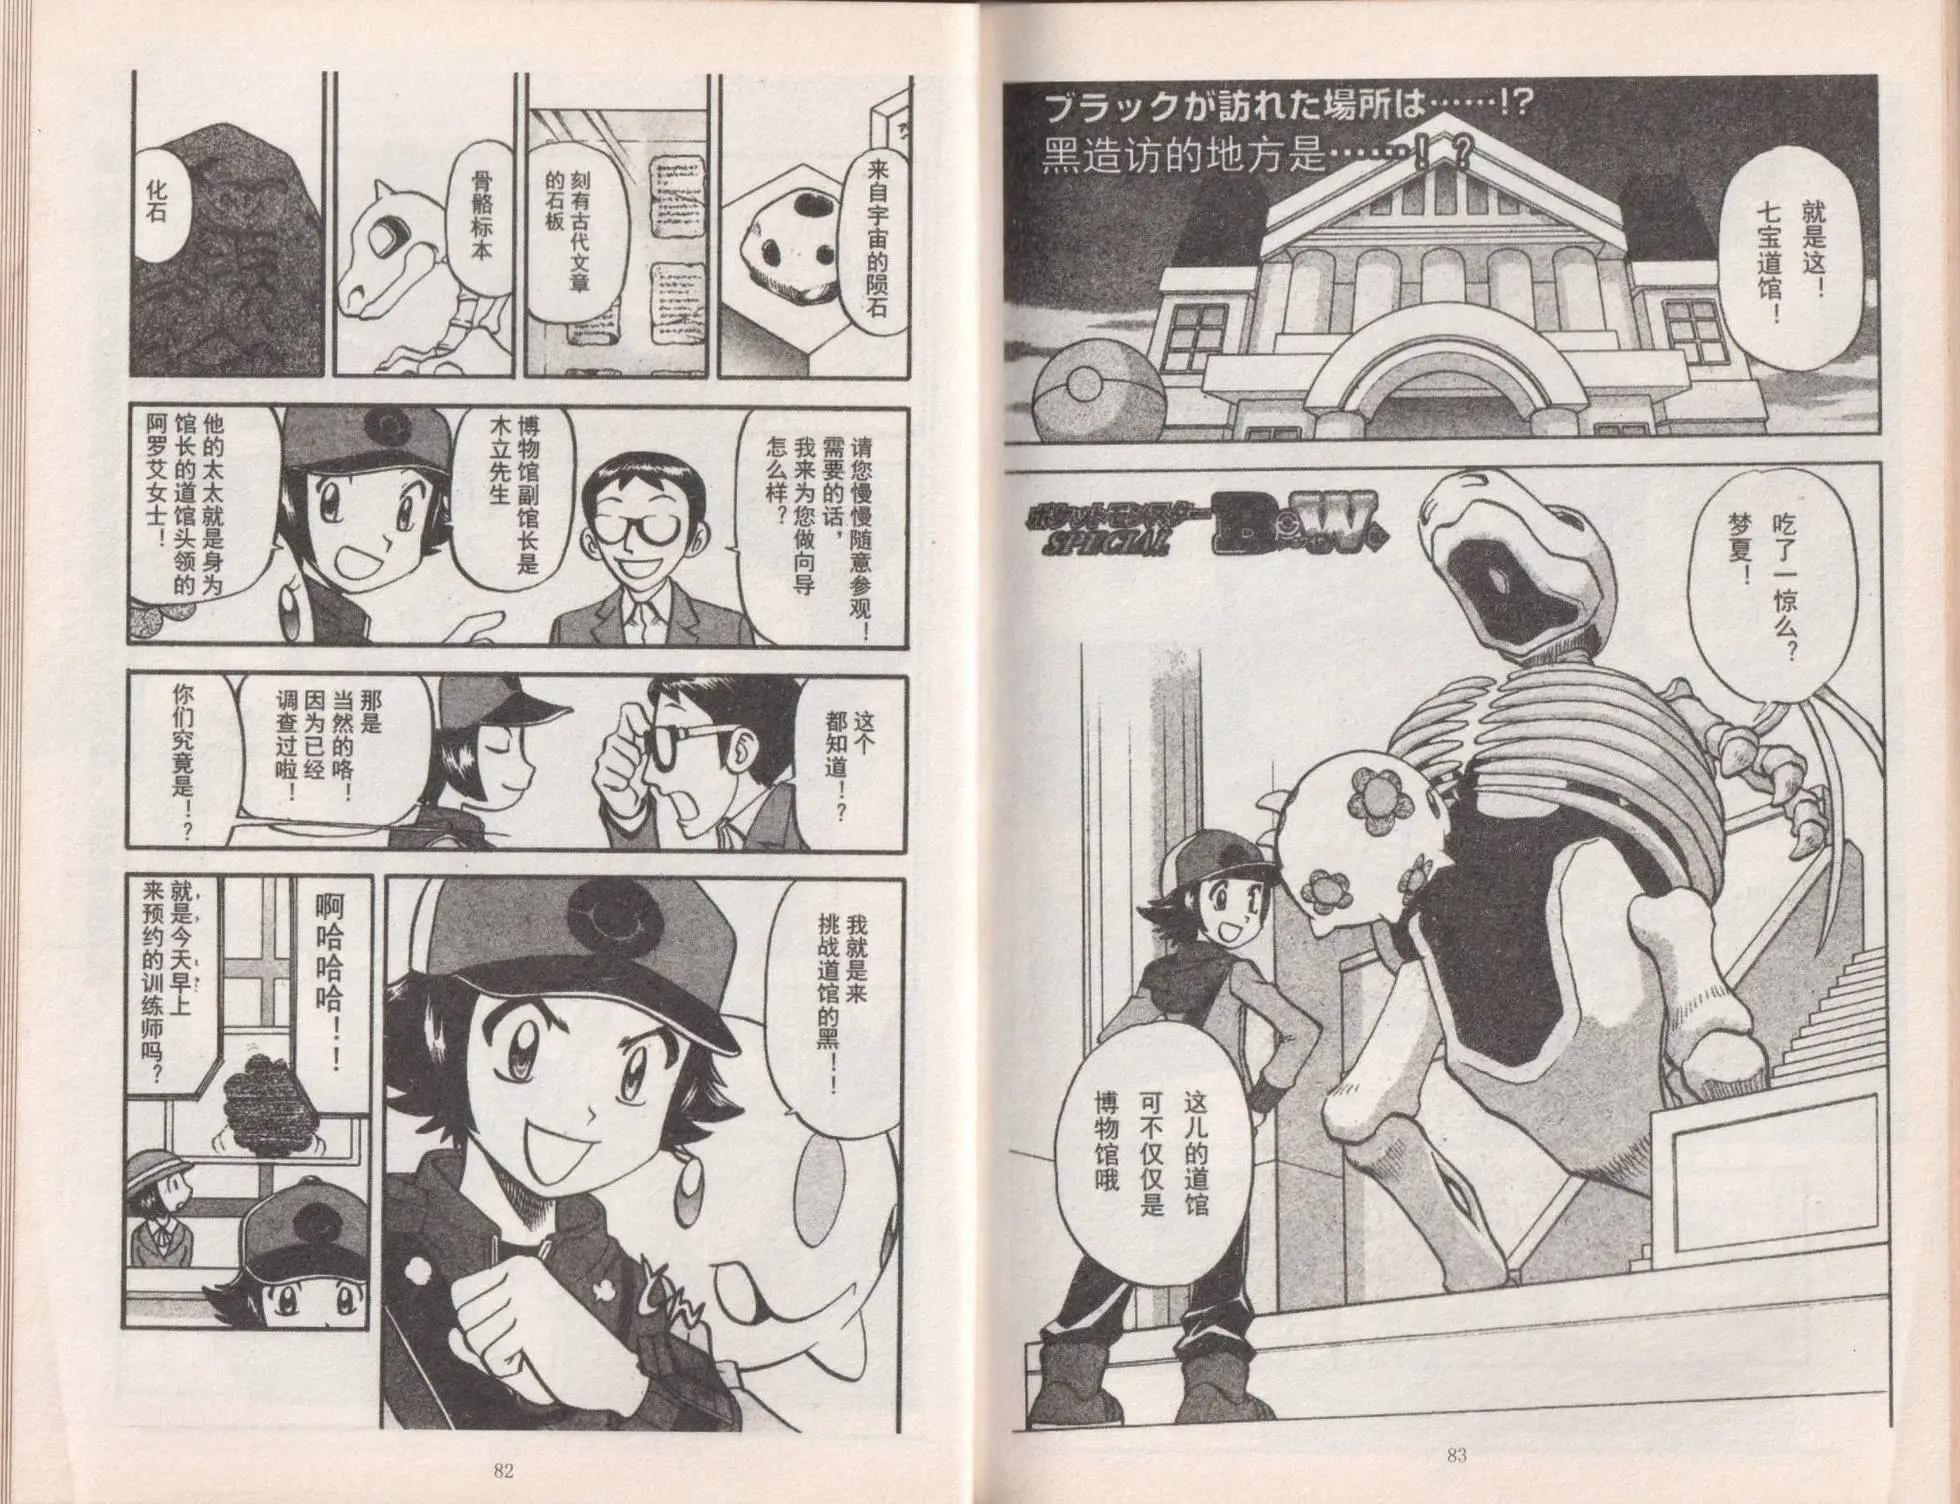 口袋迷pokemon - 第50卷(1/2) - 3